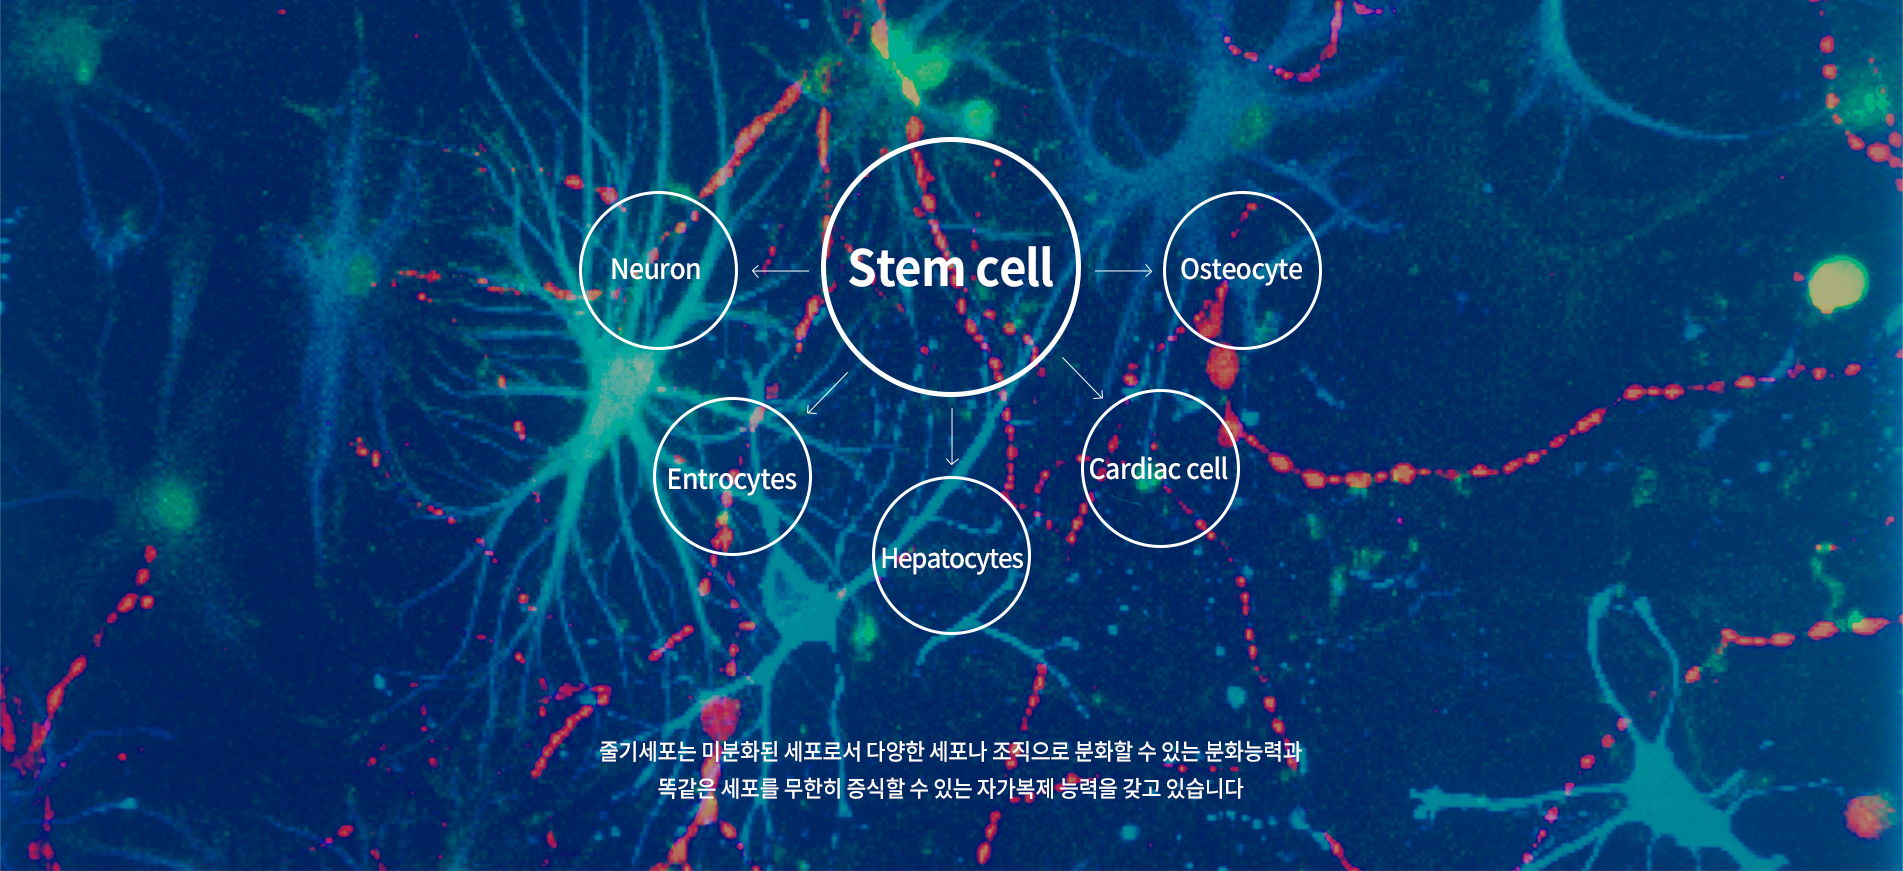 STEM CELL